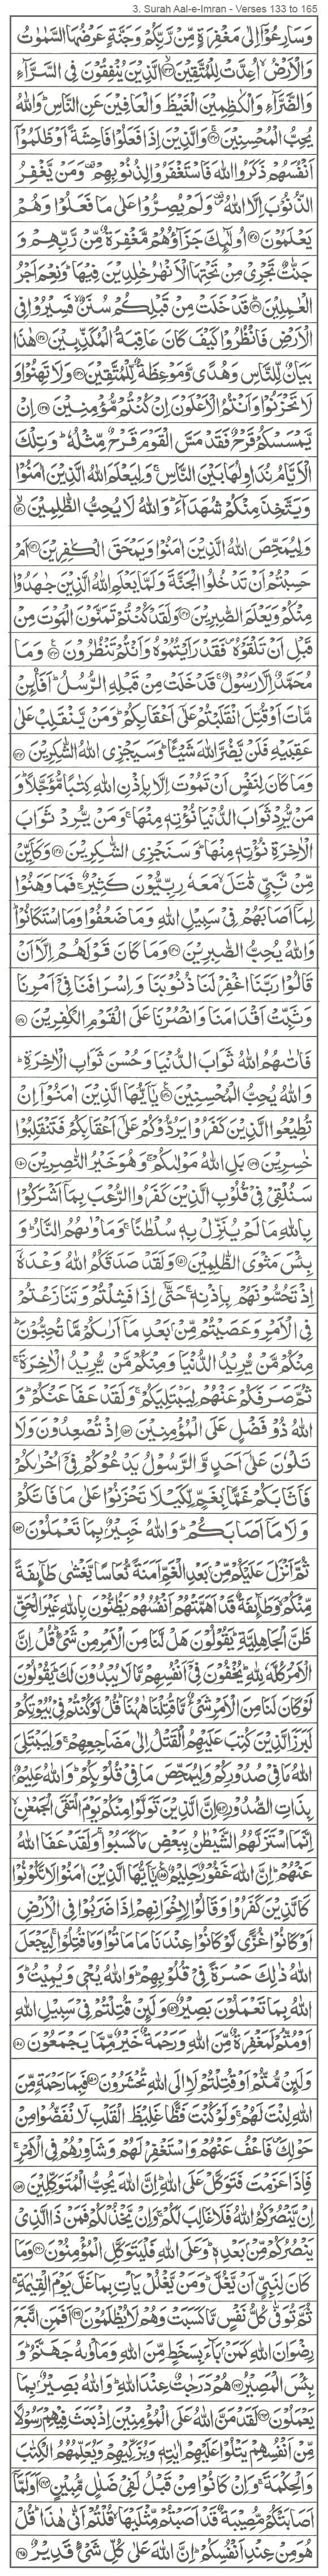 3 Surah Aal-e-Imran - Verses 133 to 165